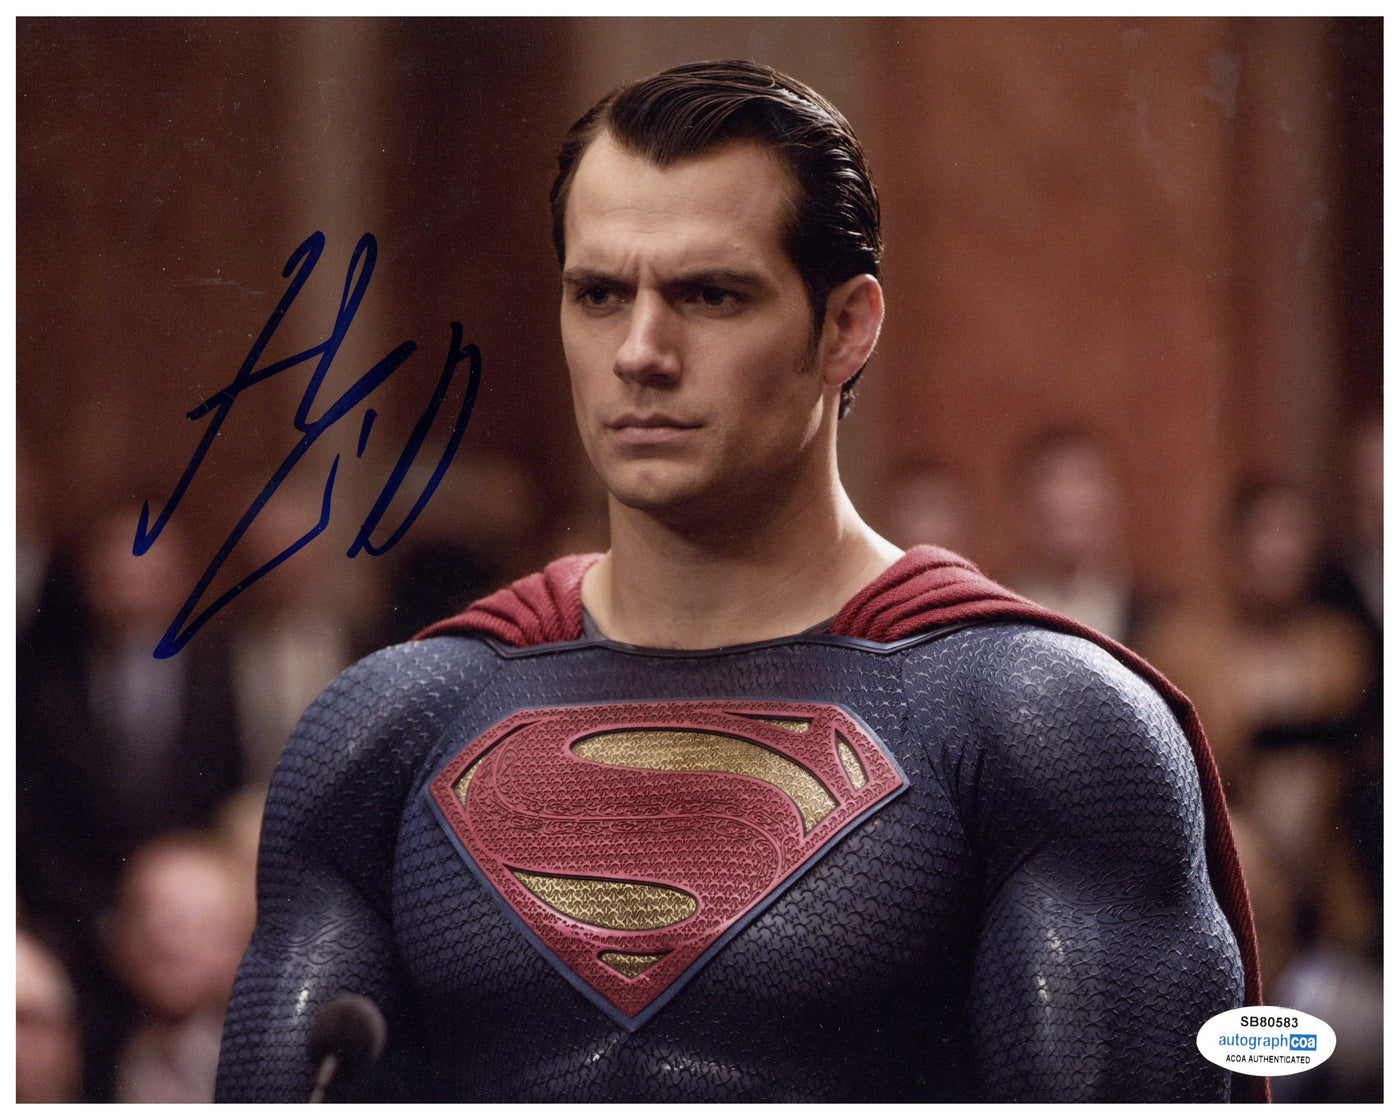 Henry Cavill Signed 8x10 Photo DC Superman Autographed ACOA 3